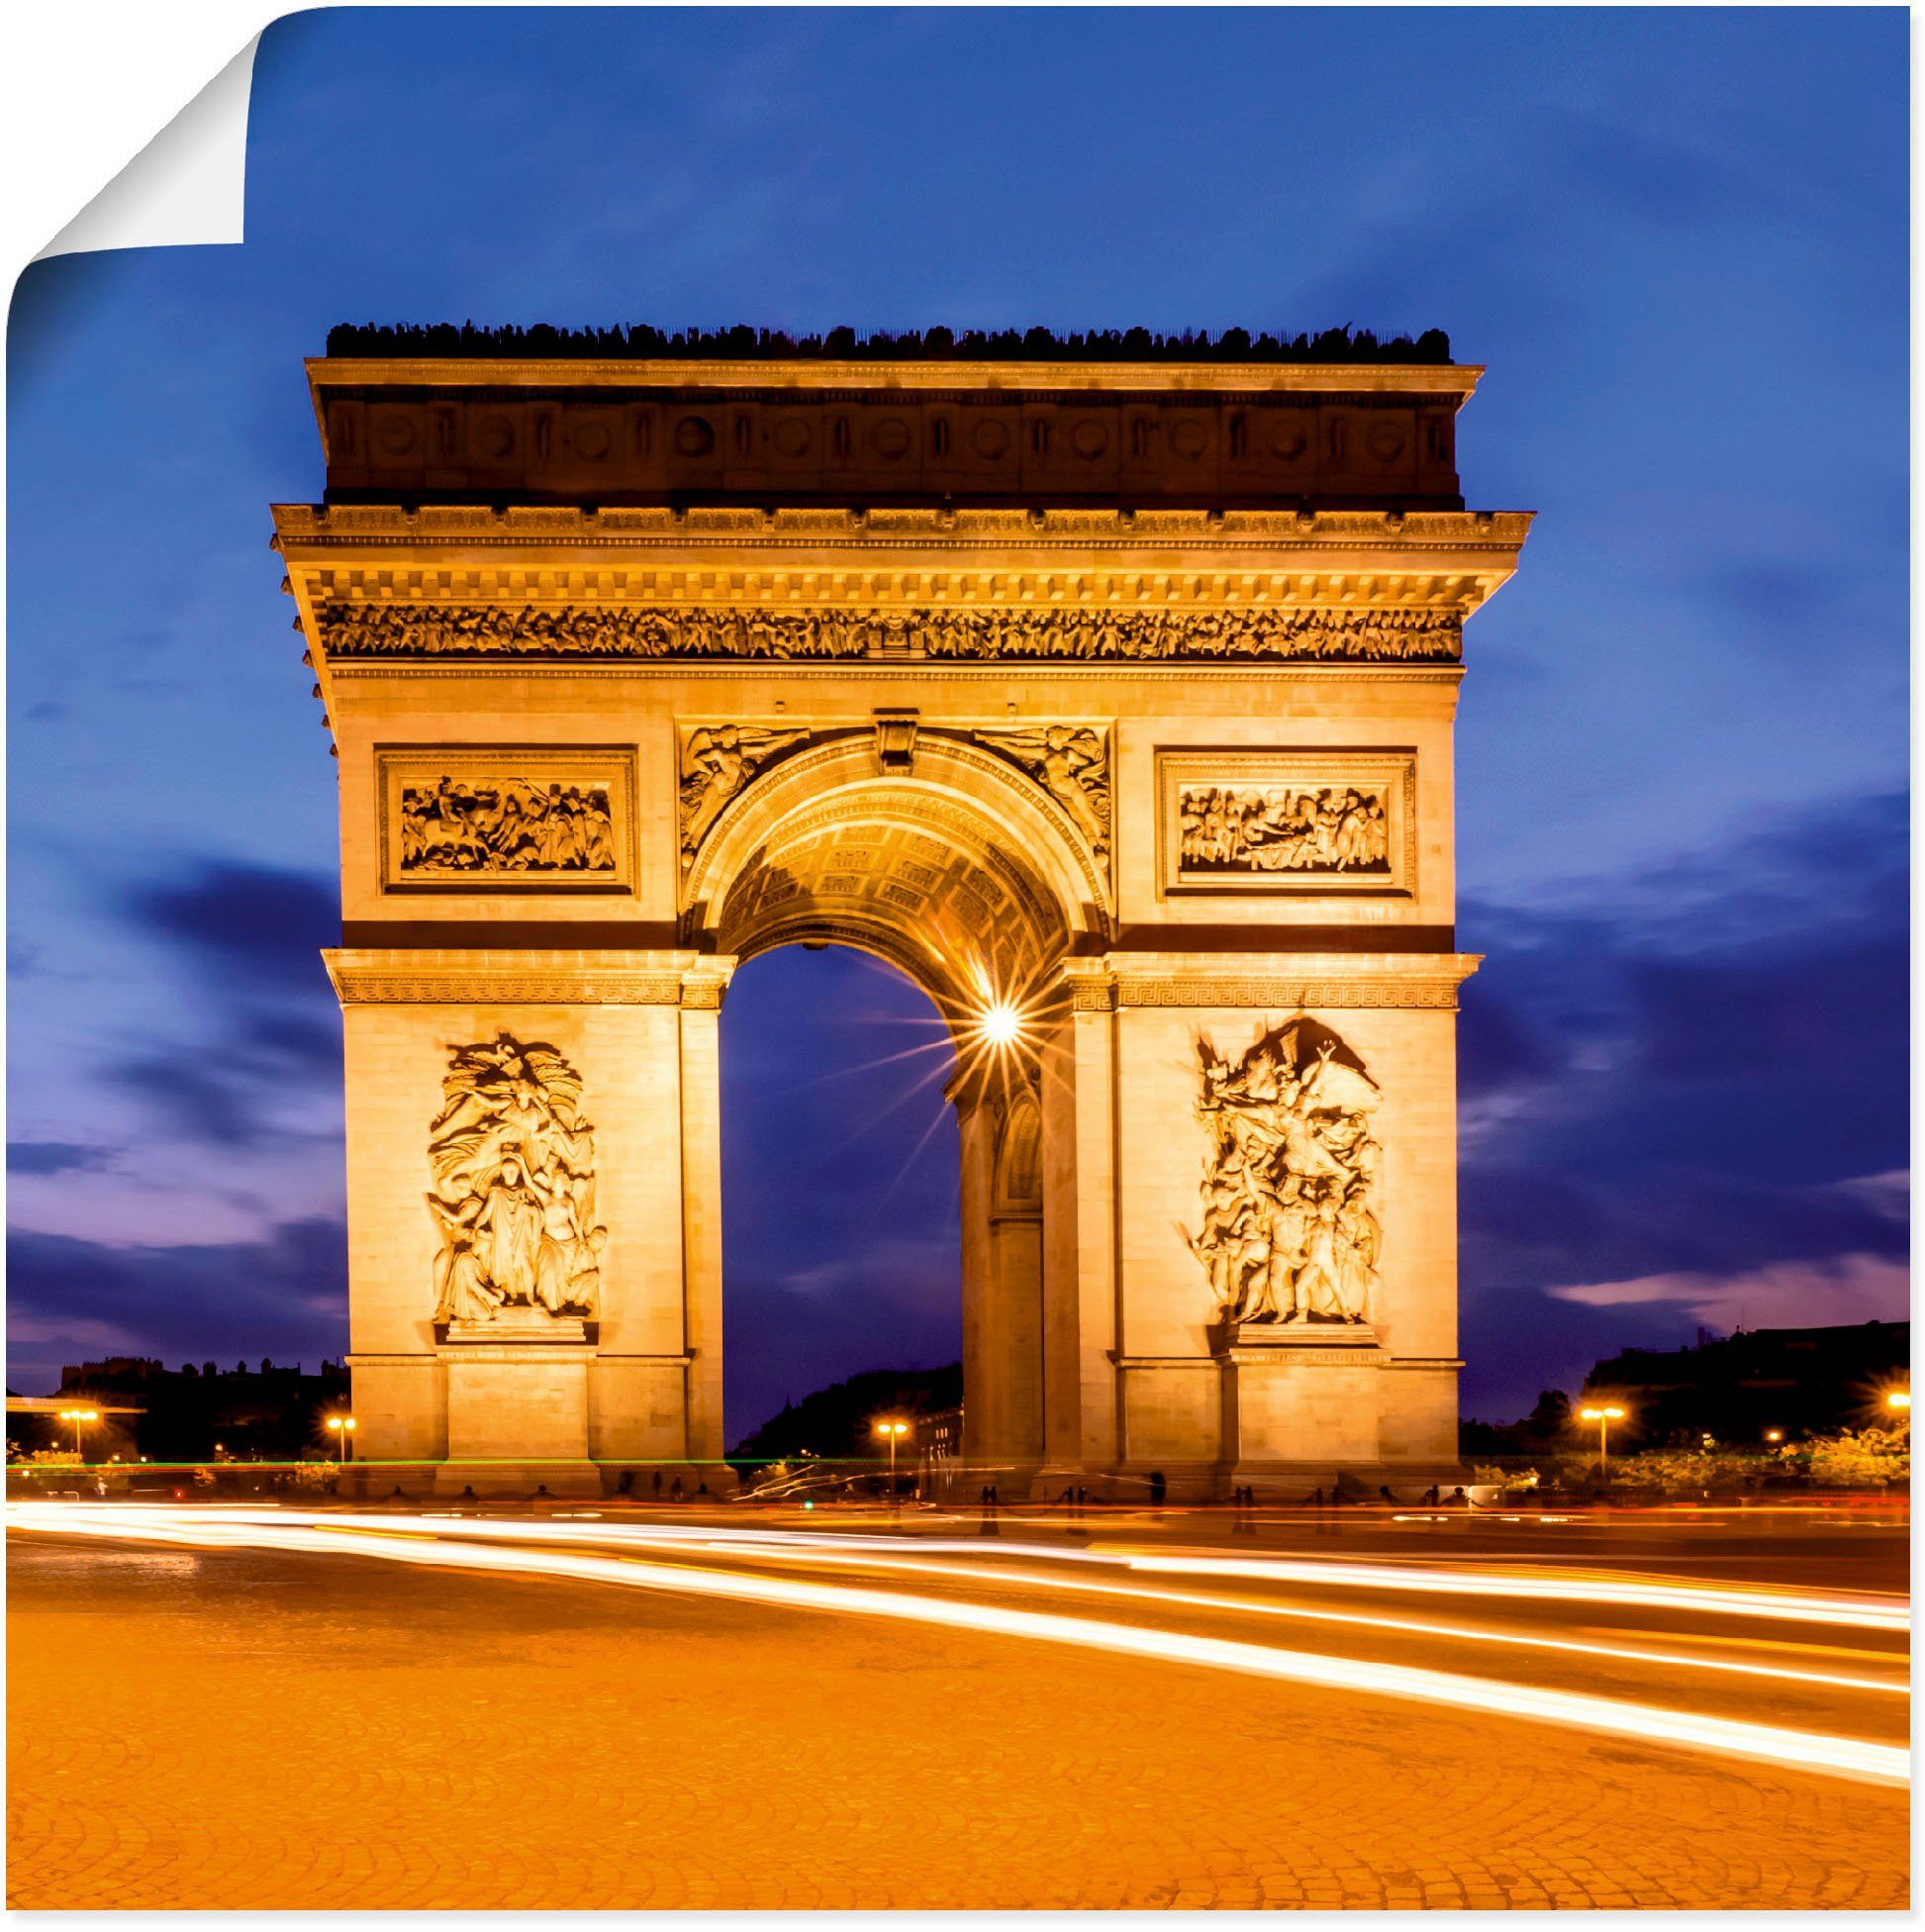 Artland versch. als Poster Wandaufkleber Leinwandbild, Größen Wandbild (1 Abend, oder Triumphbogen Gebäude Paris am in St), Alubild,